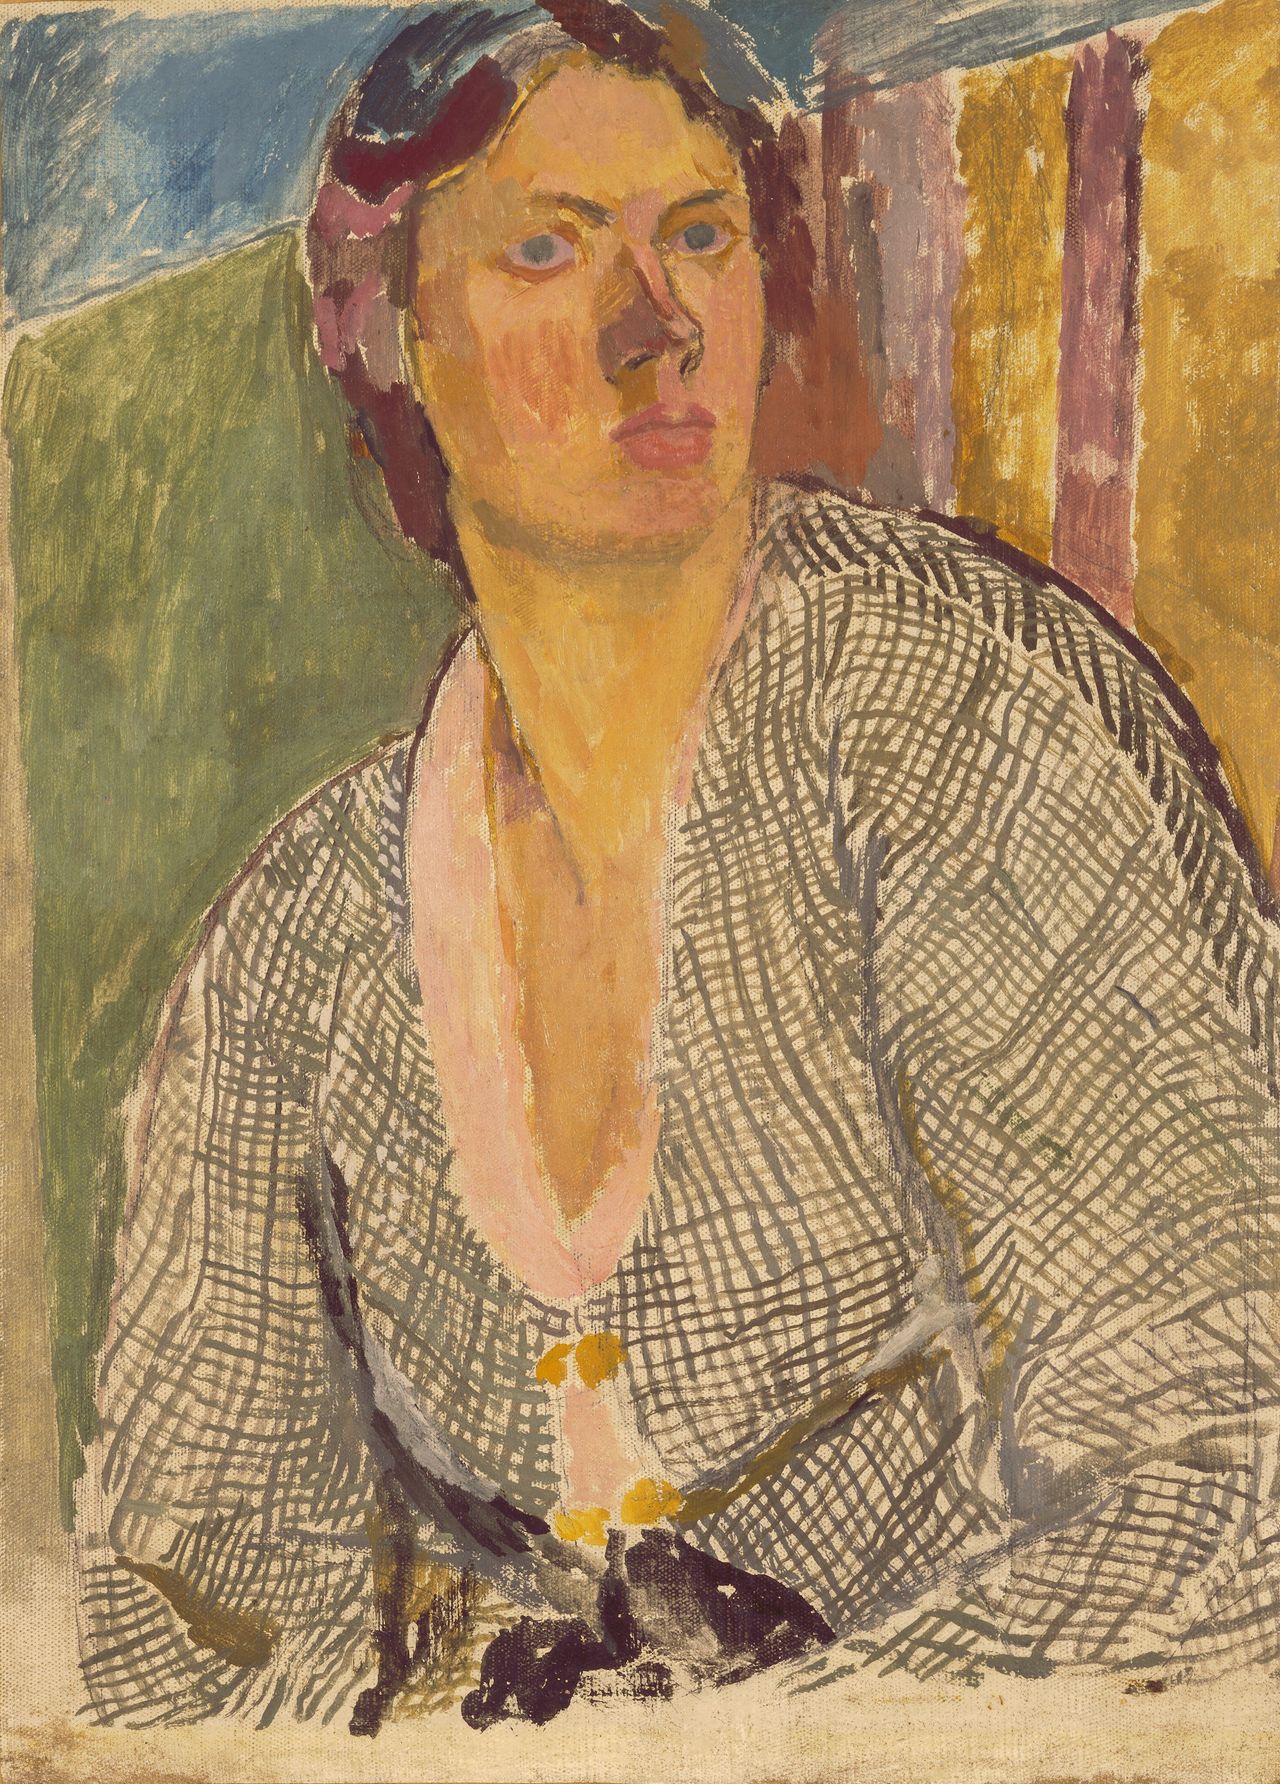 Vanessa Bell 1879-1961, "Self Portrait," ca. 1915, Oil on canvas laid on panel, 63.8 x 45.9 cm, Yale Center for British Art, Paul Mellon Fund. © The Estate of Vanessa Bell, courtesy of Henrietta Garnett